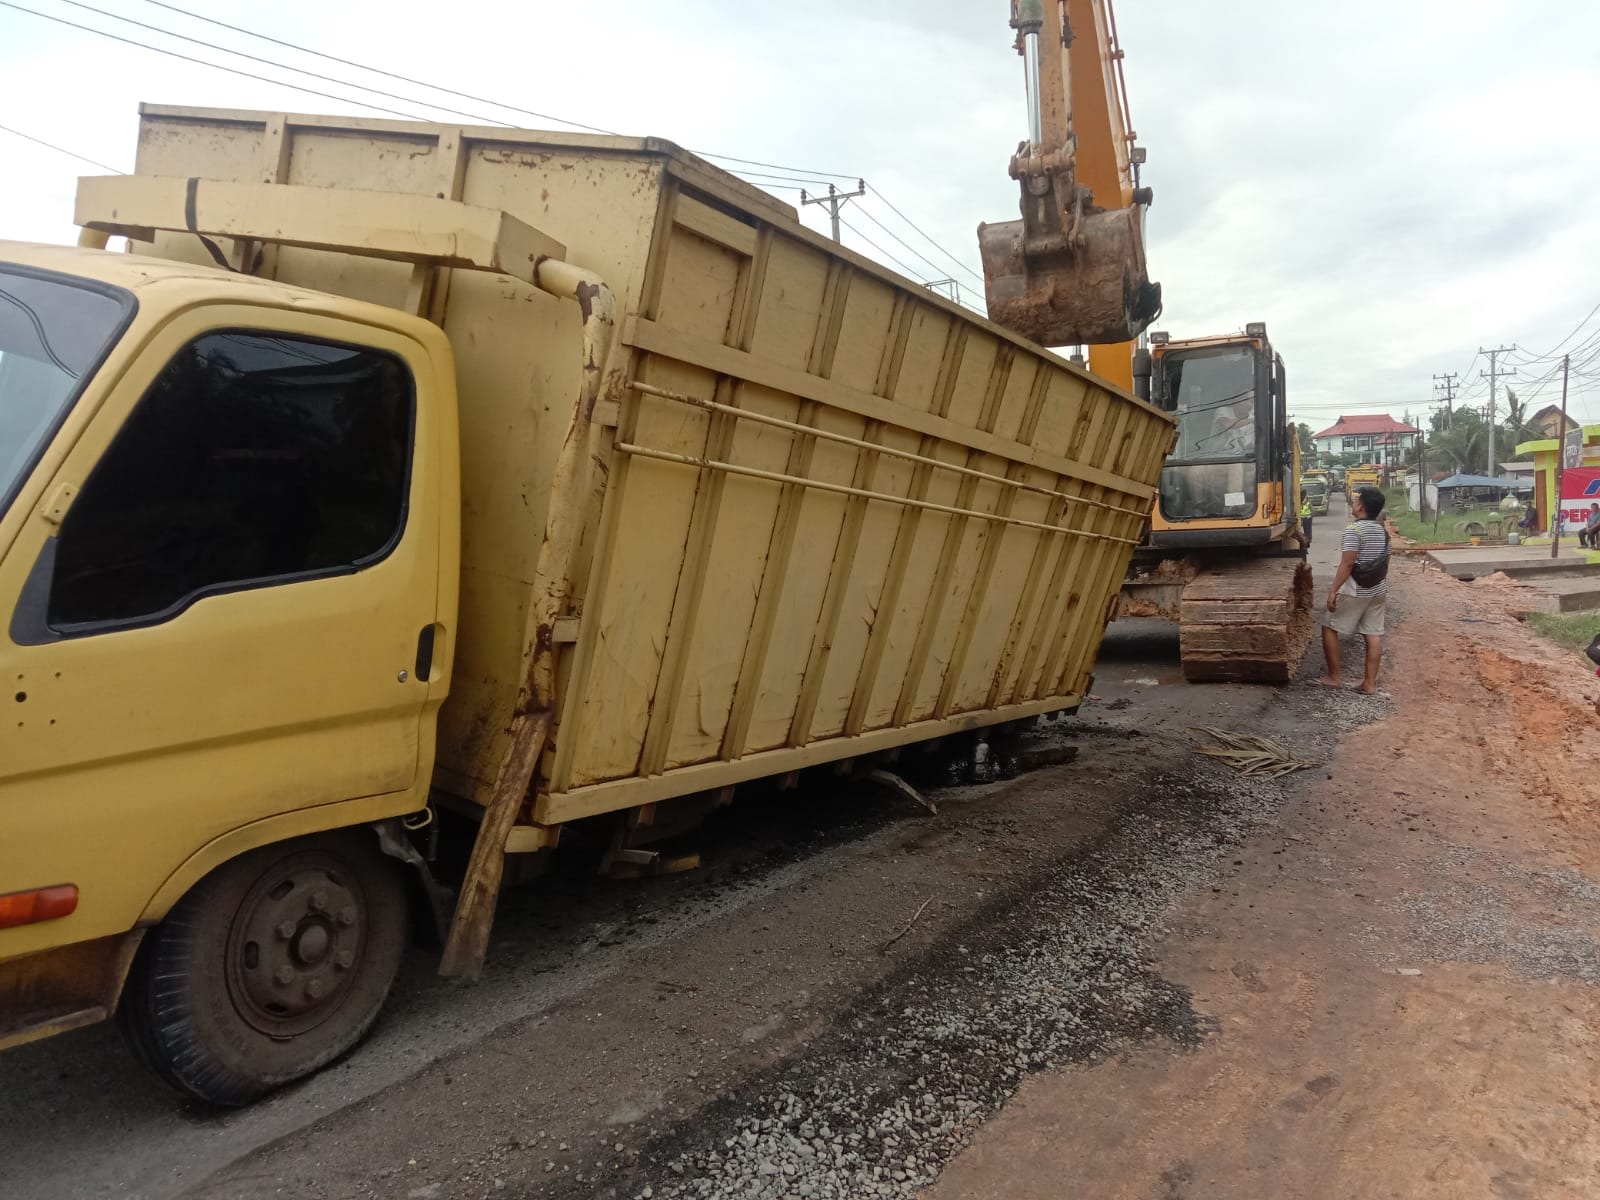 Gara-Gara Truk Batu Bara Rusak Menyebabkan Kemacetan Panjang di Simpang Sungai Duren